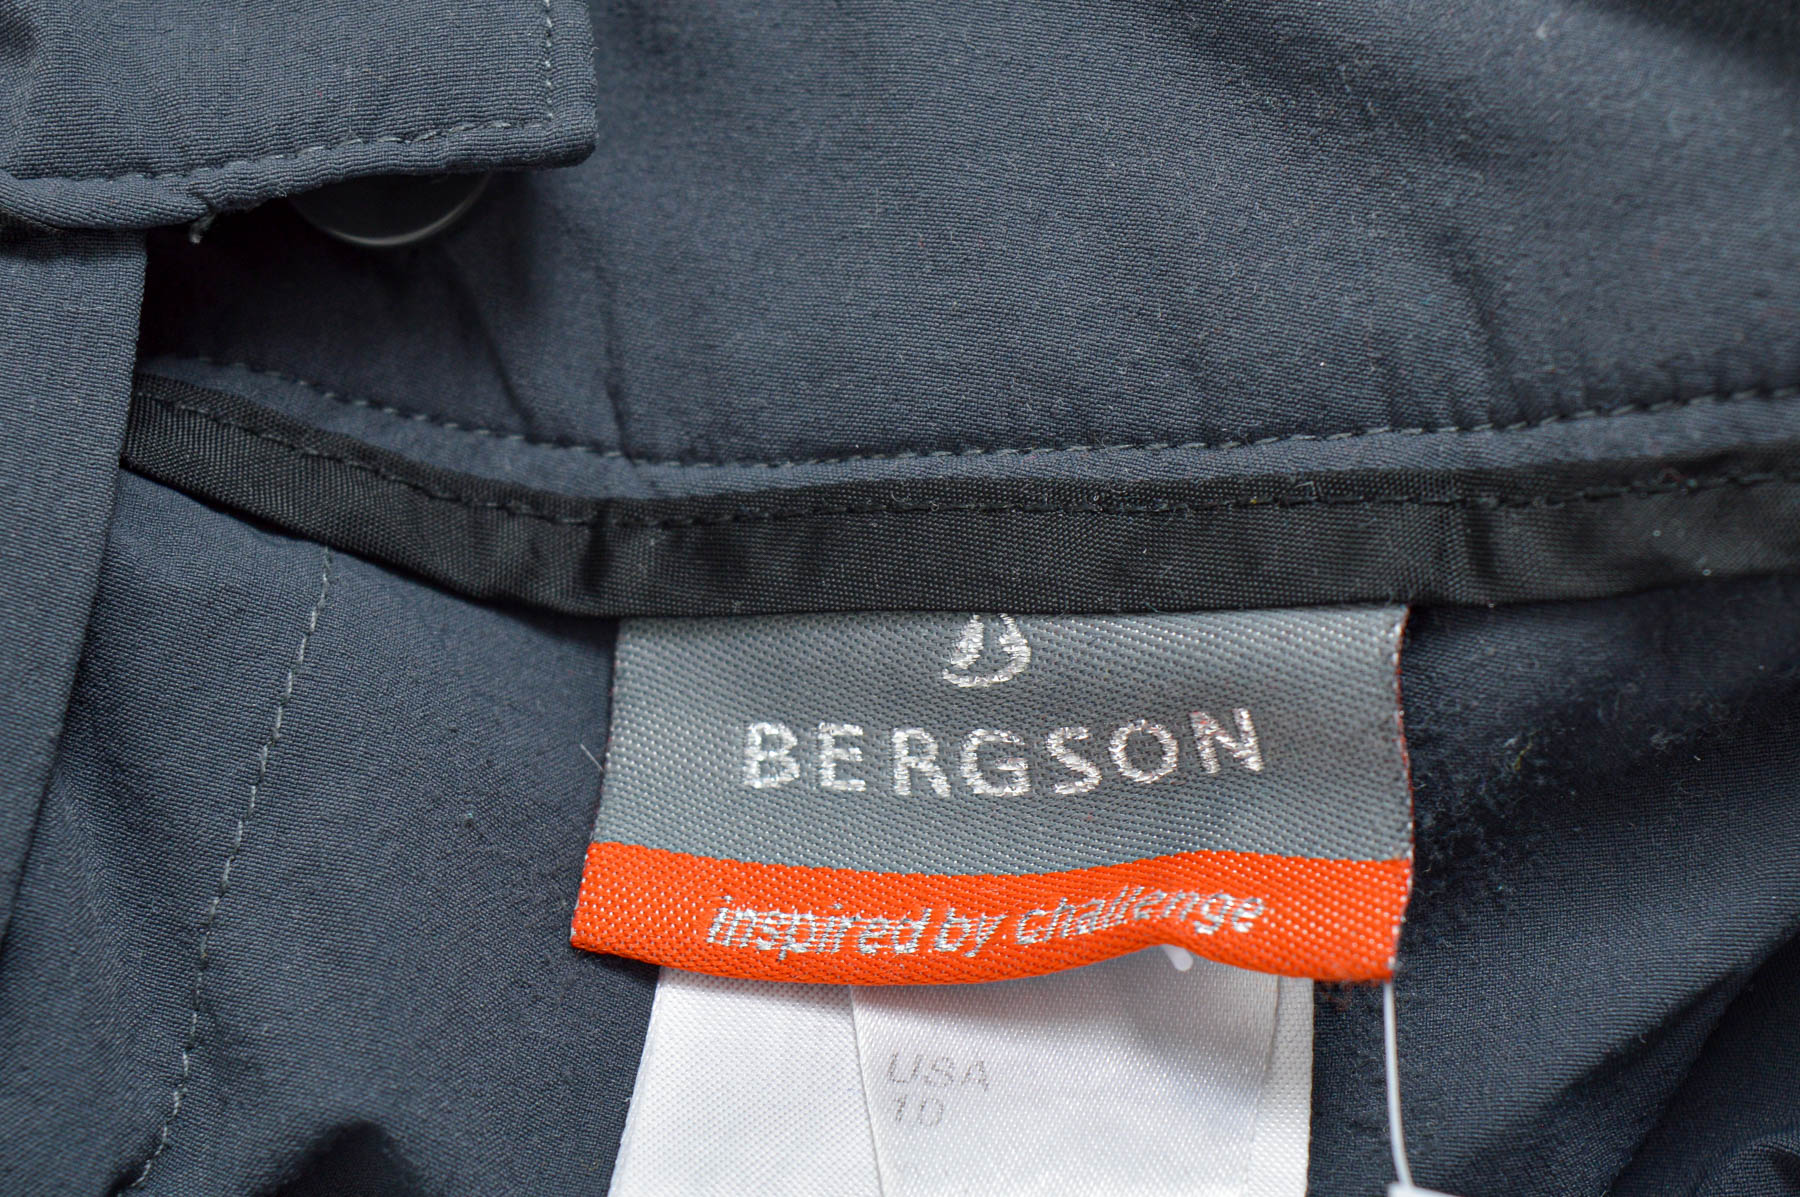 Men's trousers - Bergson - 2